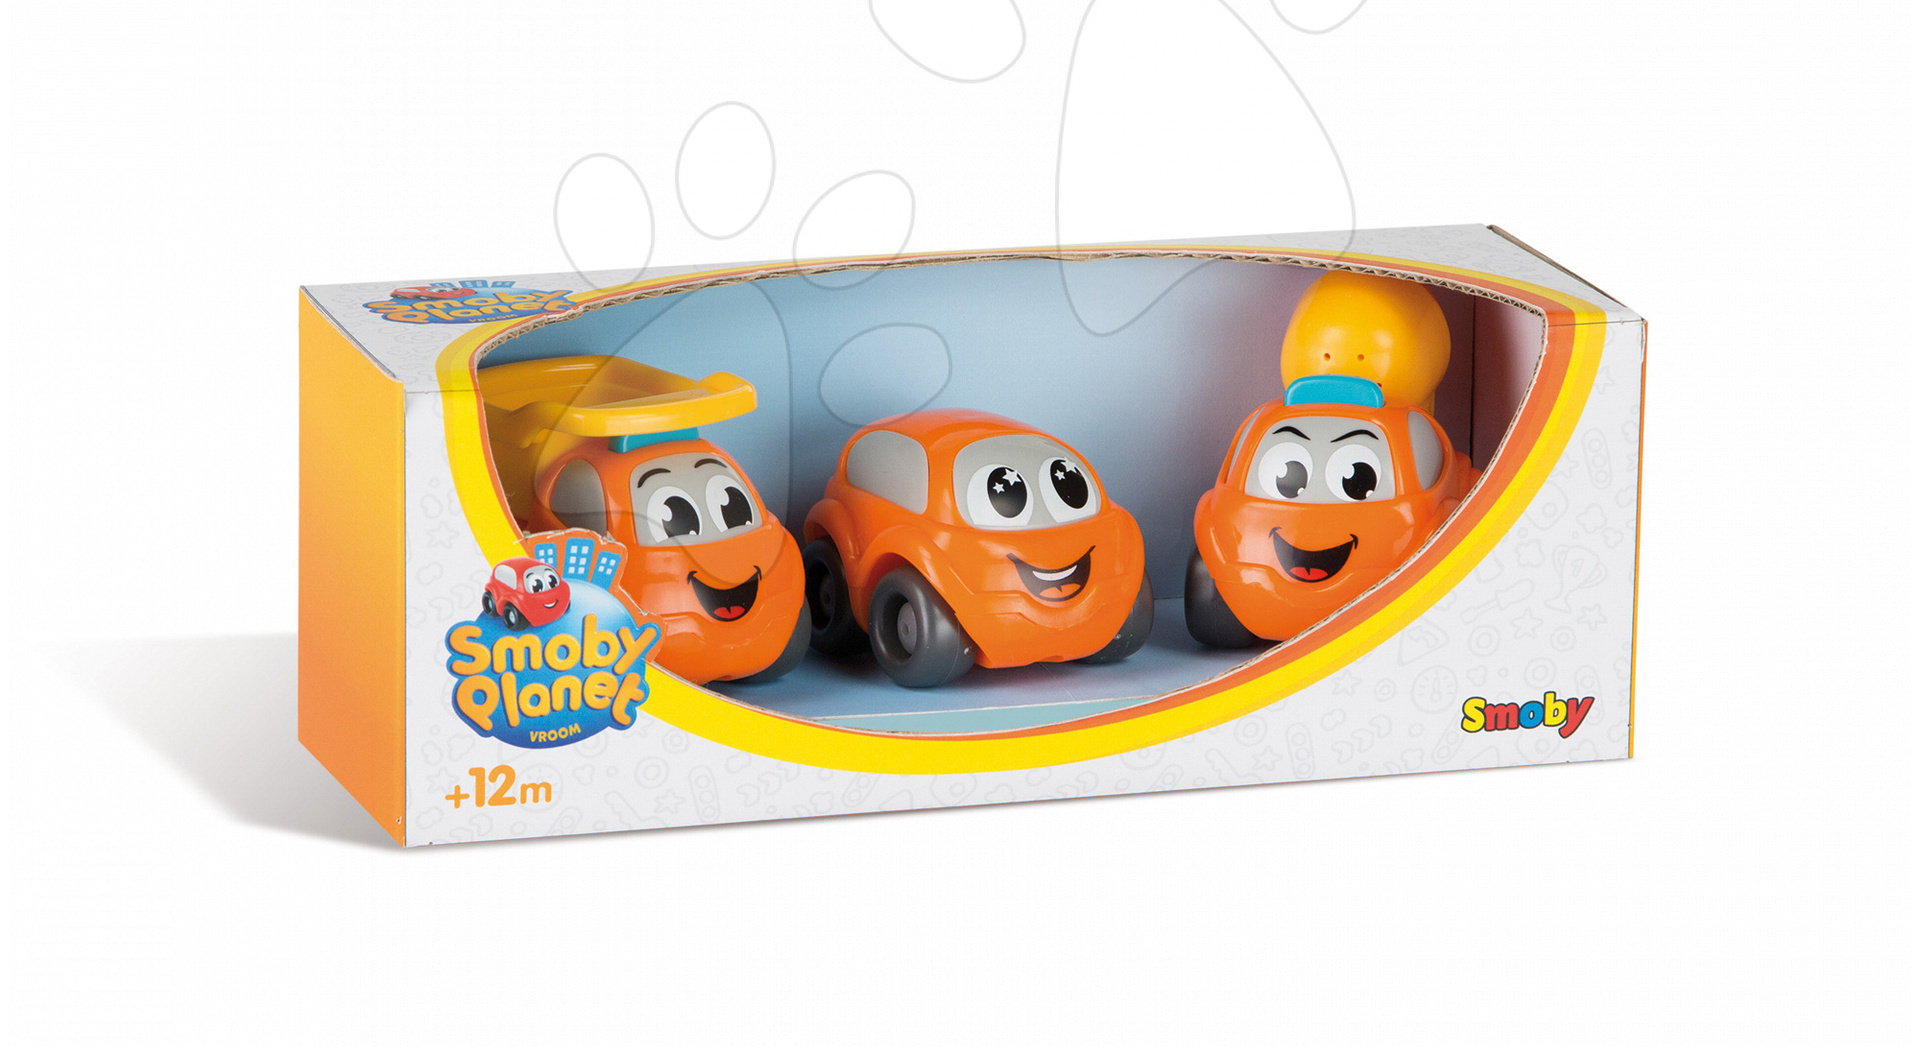 Smoby munkagépek Vroom Planet 3 darab 120201 narancssárga